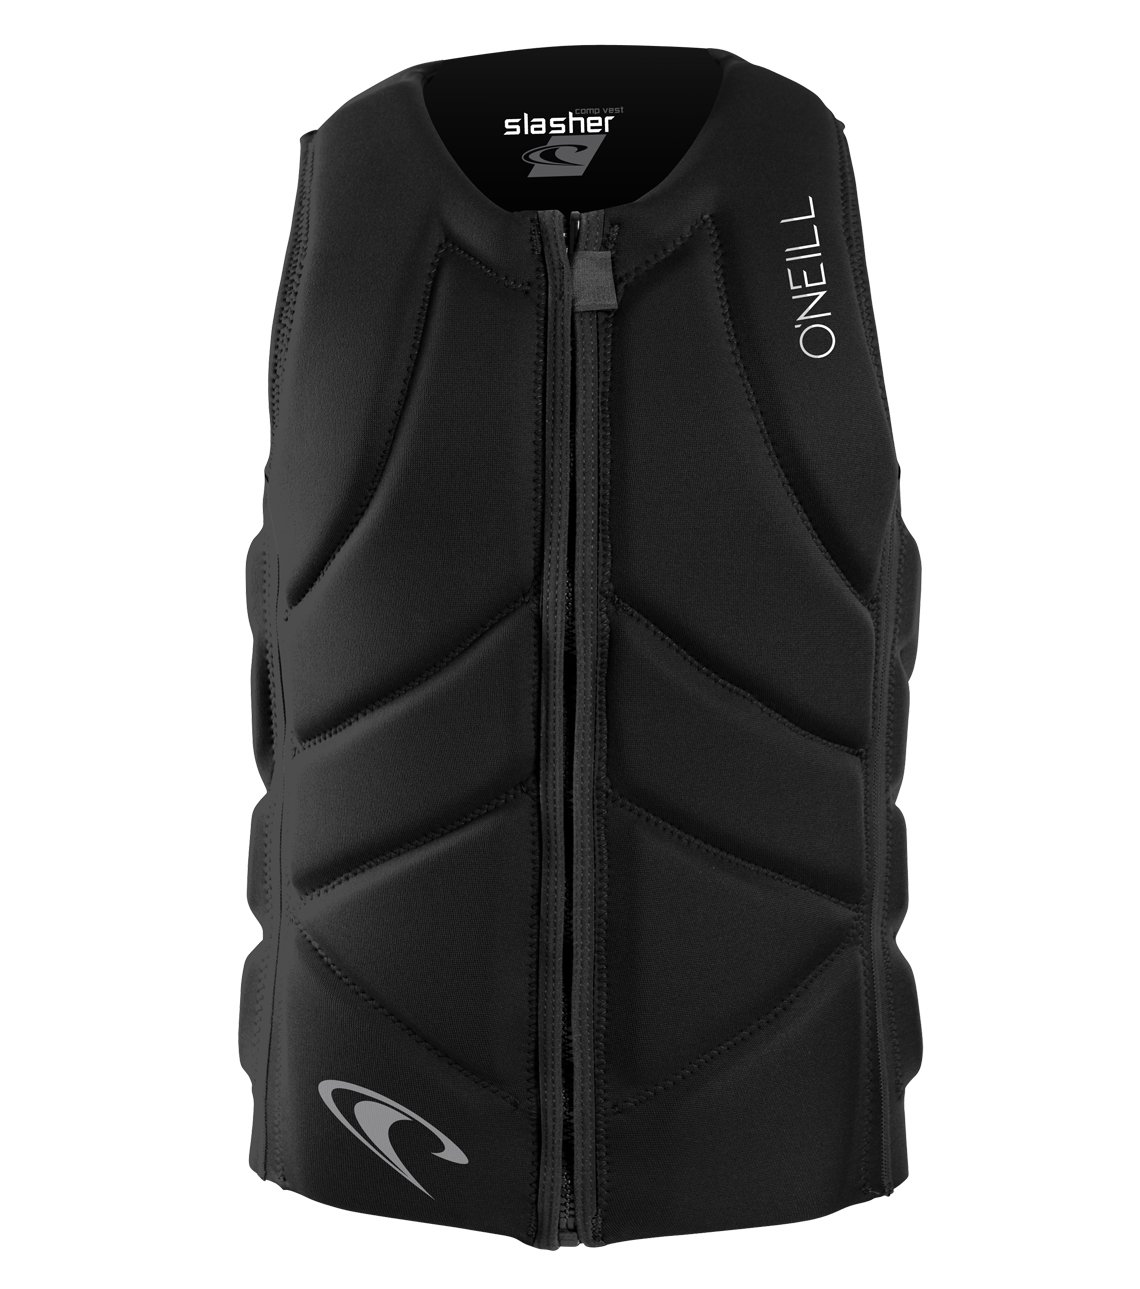 O'Neill Wetsuits Men's Slasher Comp Life Vest, Black, Large